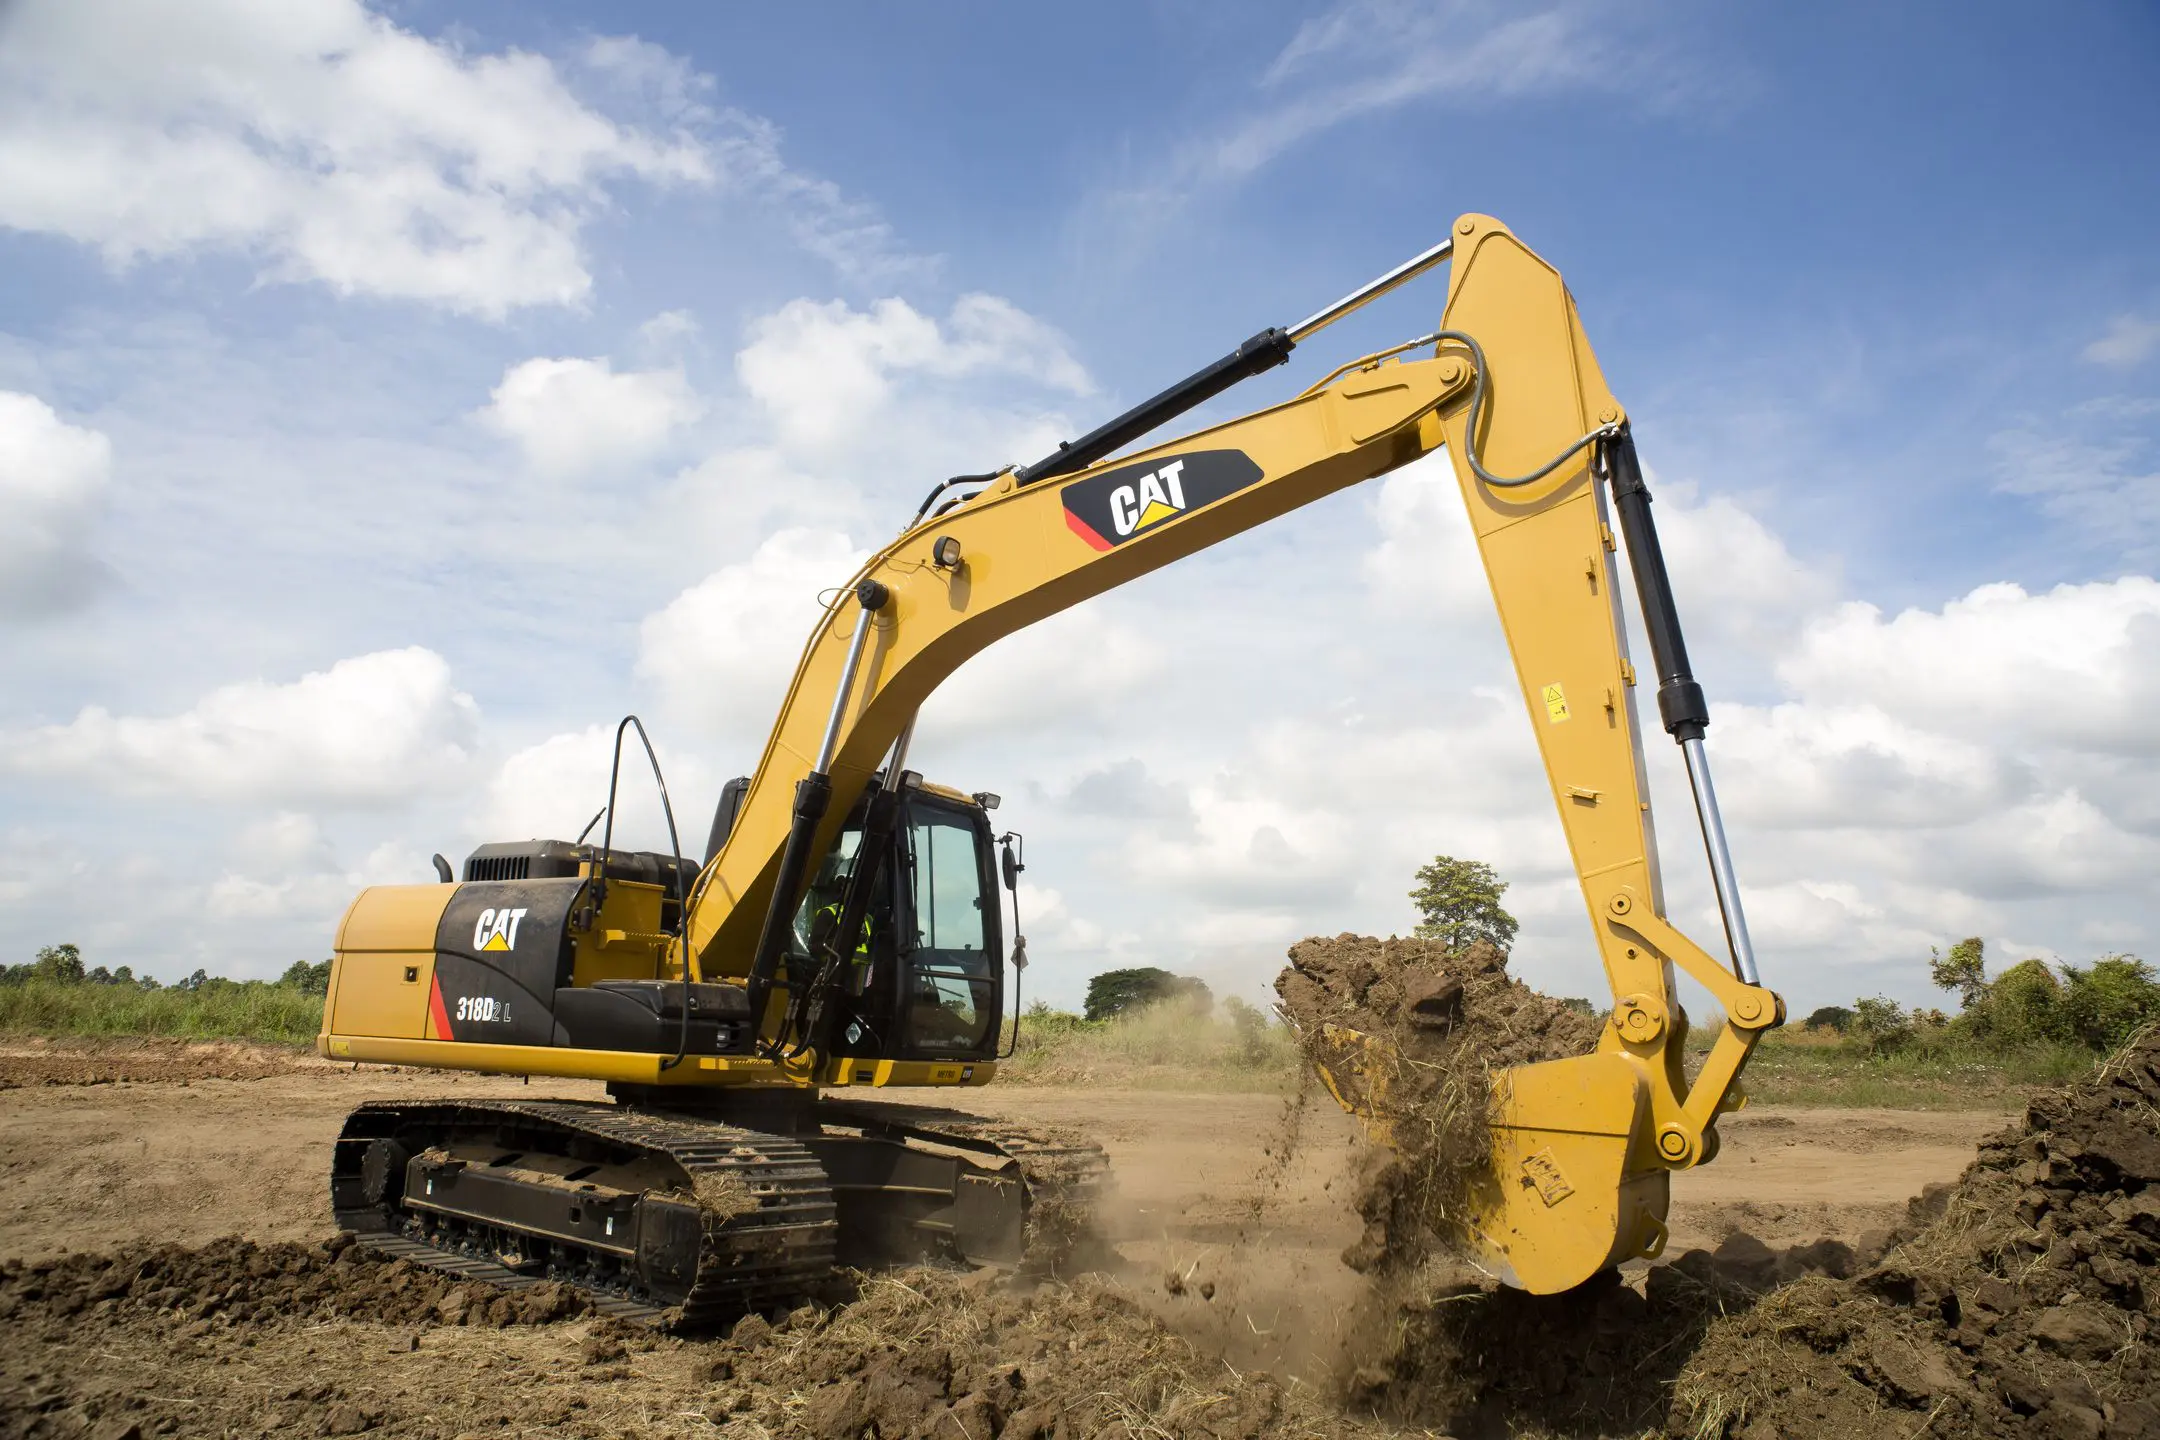 Excavator digging up the ground